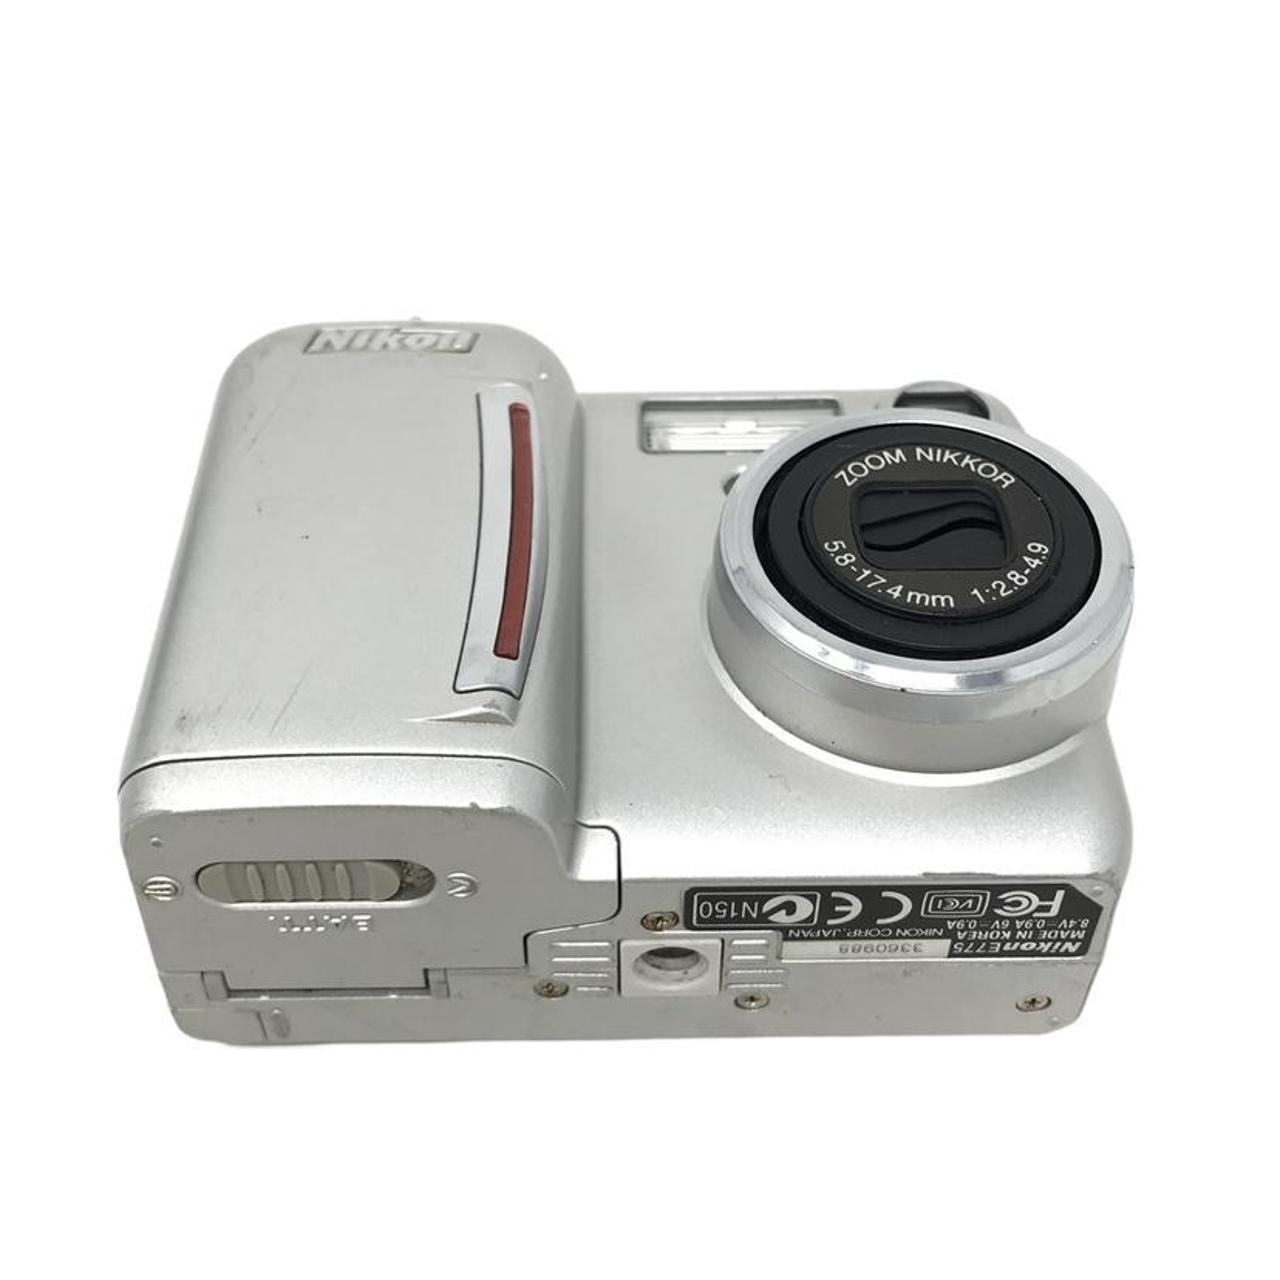 Product Image 4 - Nikon Coolpix 775 Digital Camera

Comes